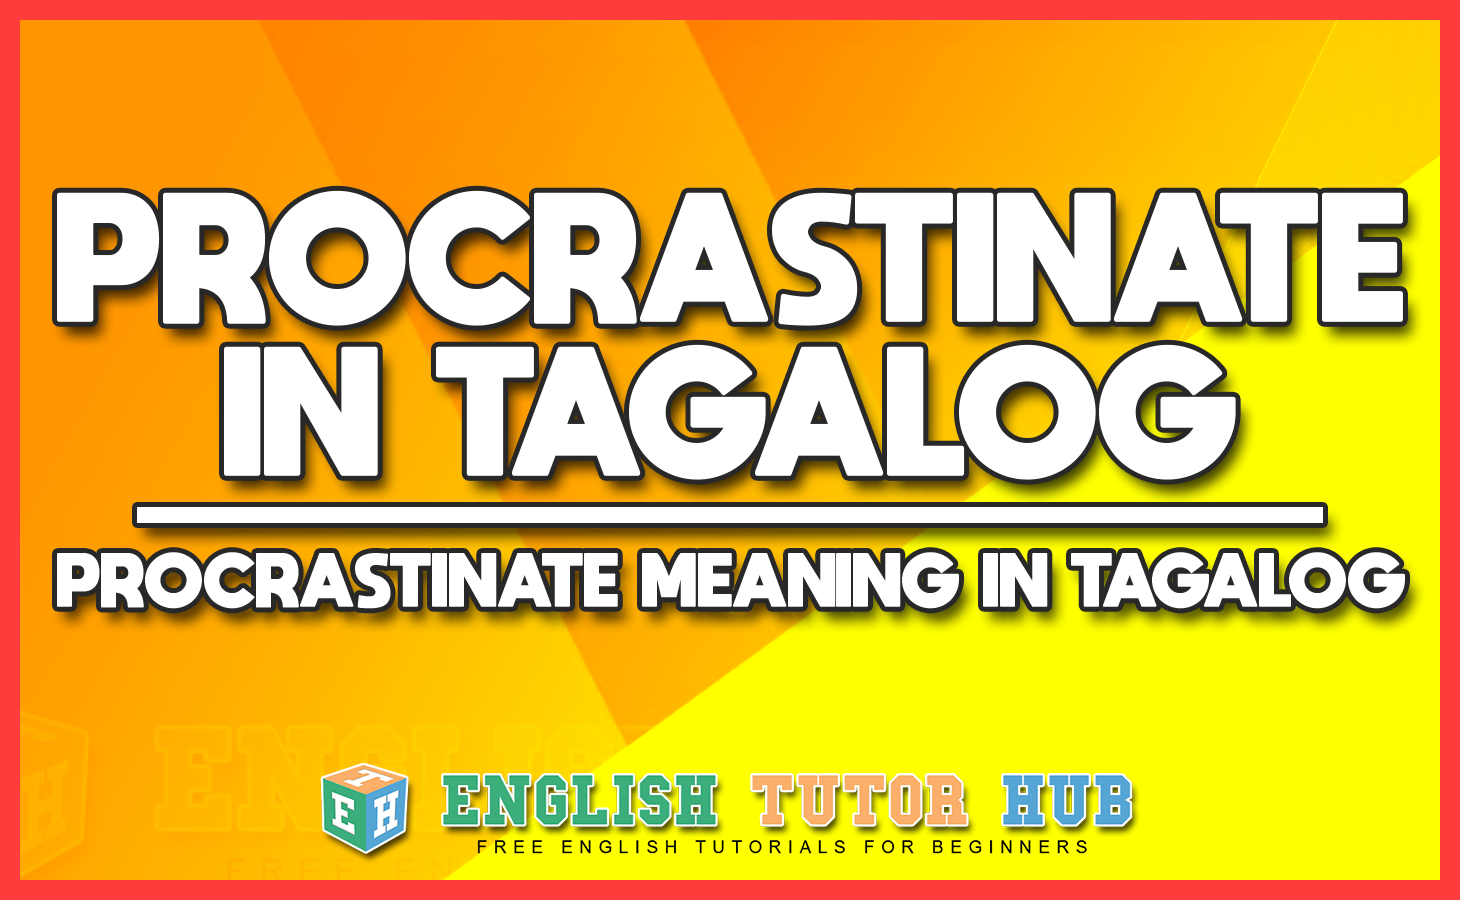 PROCRASTINATE IN TAGALOG - PROCRASTINATE MEANING IN TAGALOG